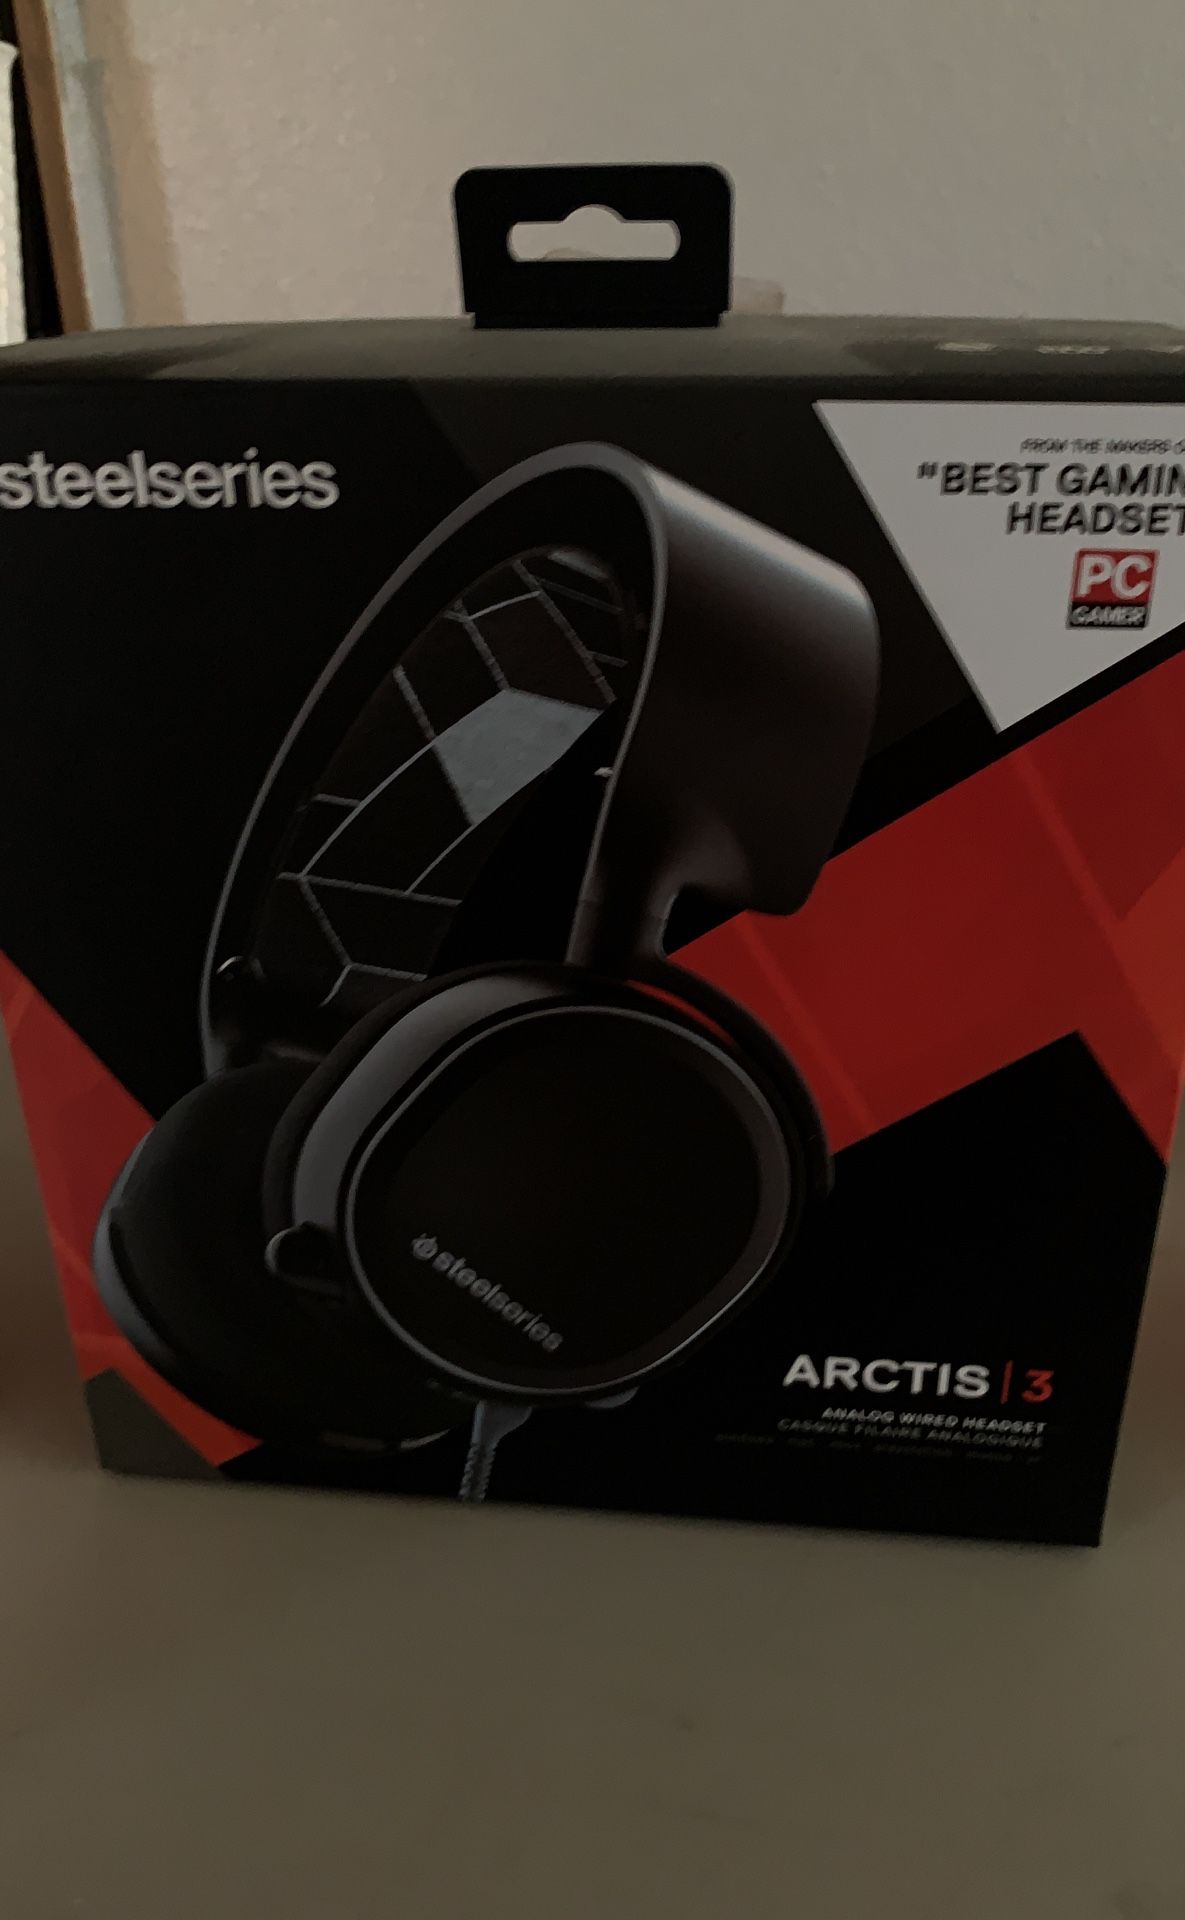 Steeleseries arctis 3 gaming headset